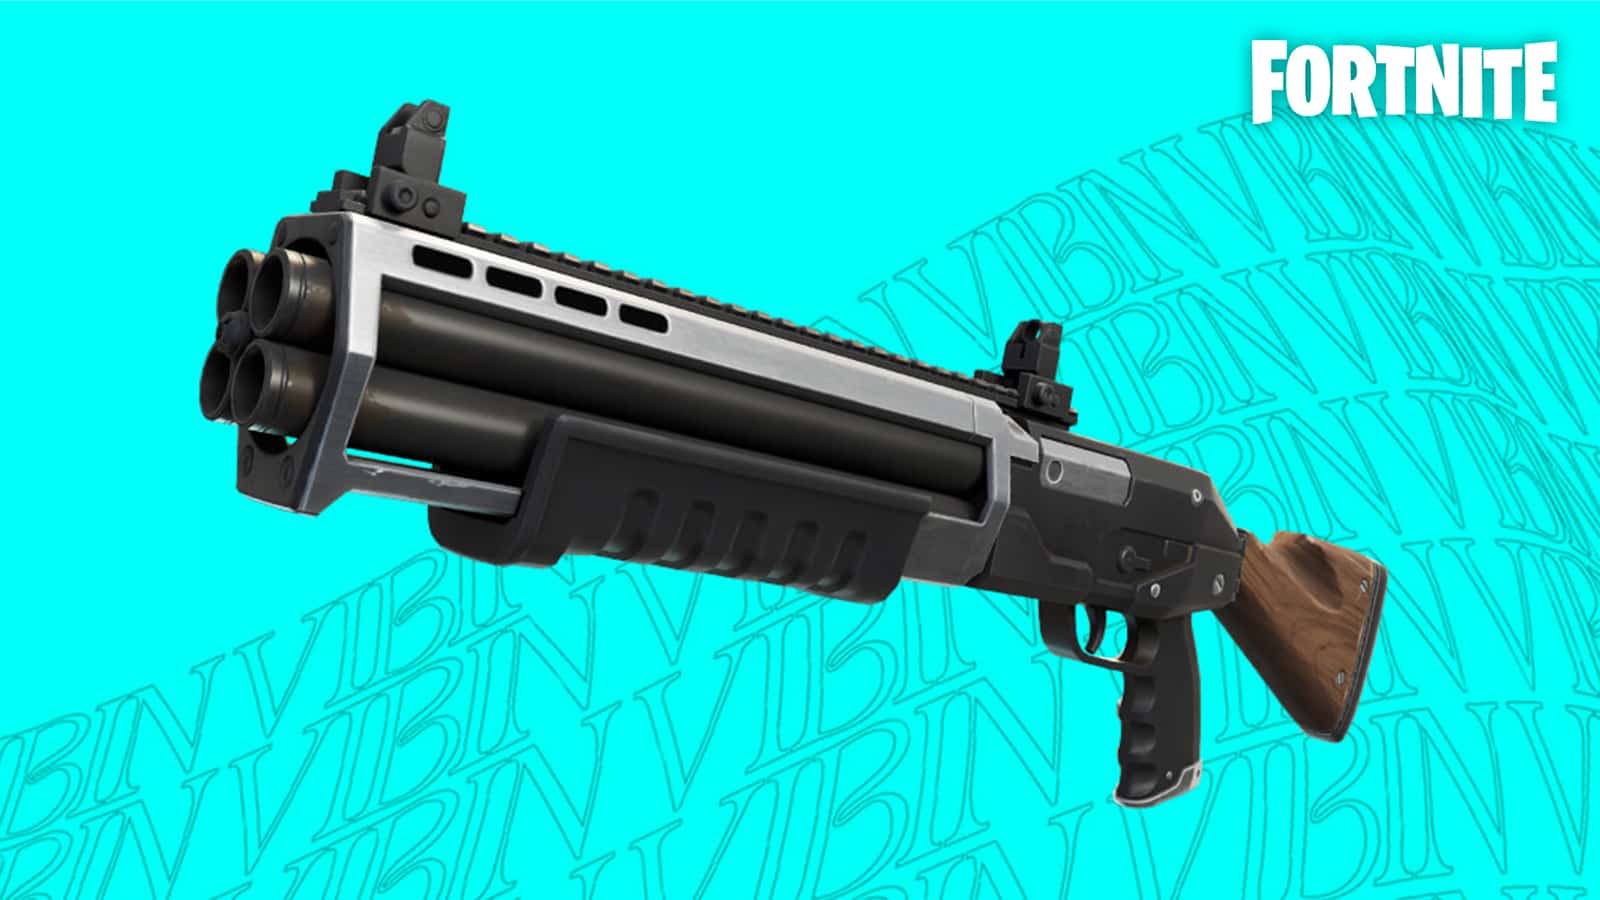 The new Shotgun weapon in Fortnite